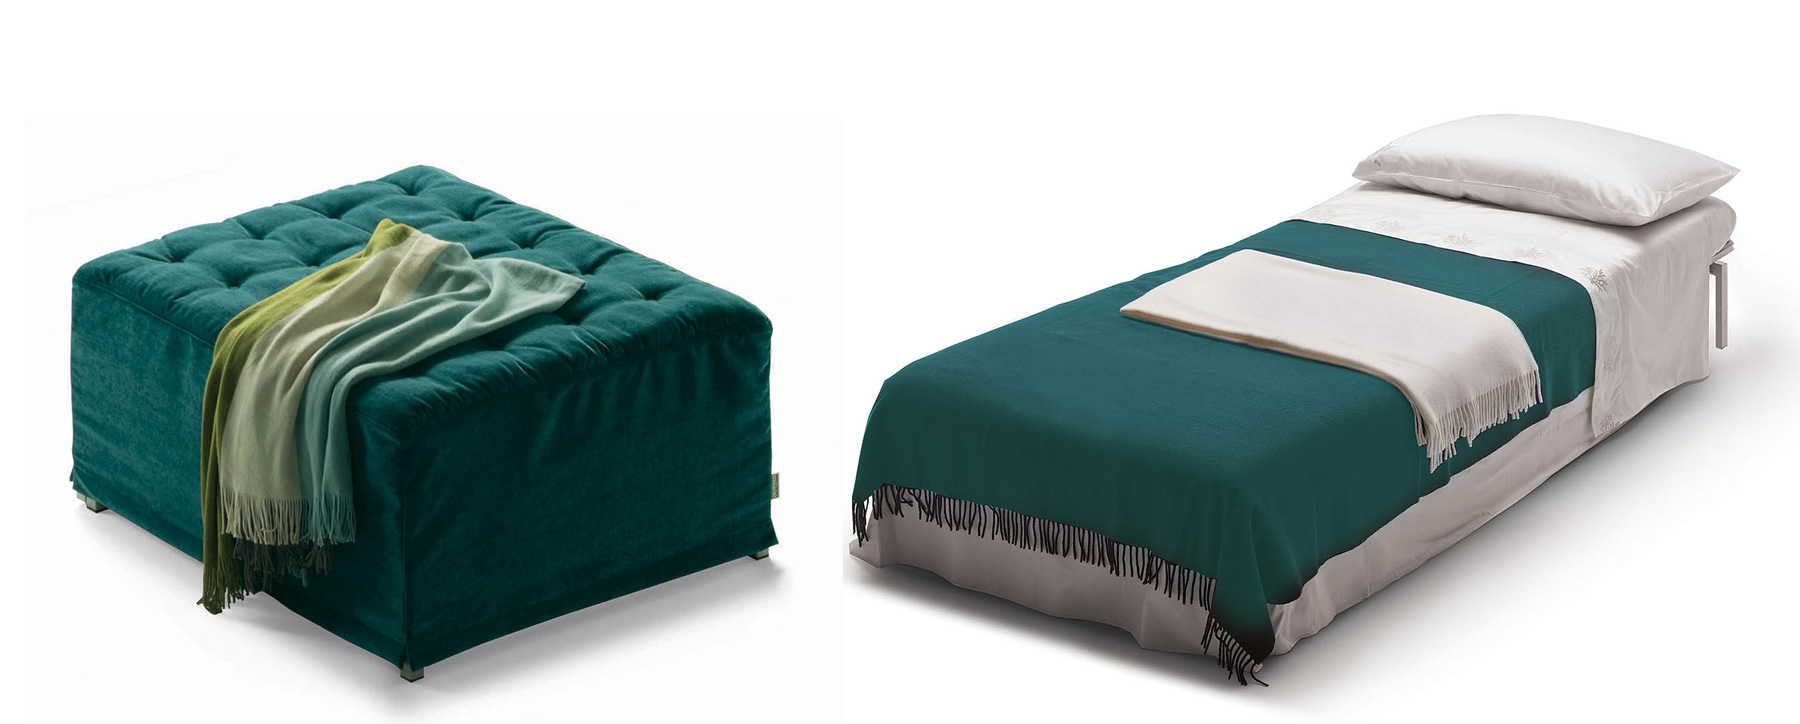 Milano Bedding (by Kover Srl) - "Dorsey Pouf" Ottoman Beds